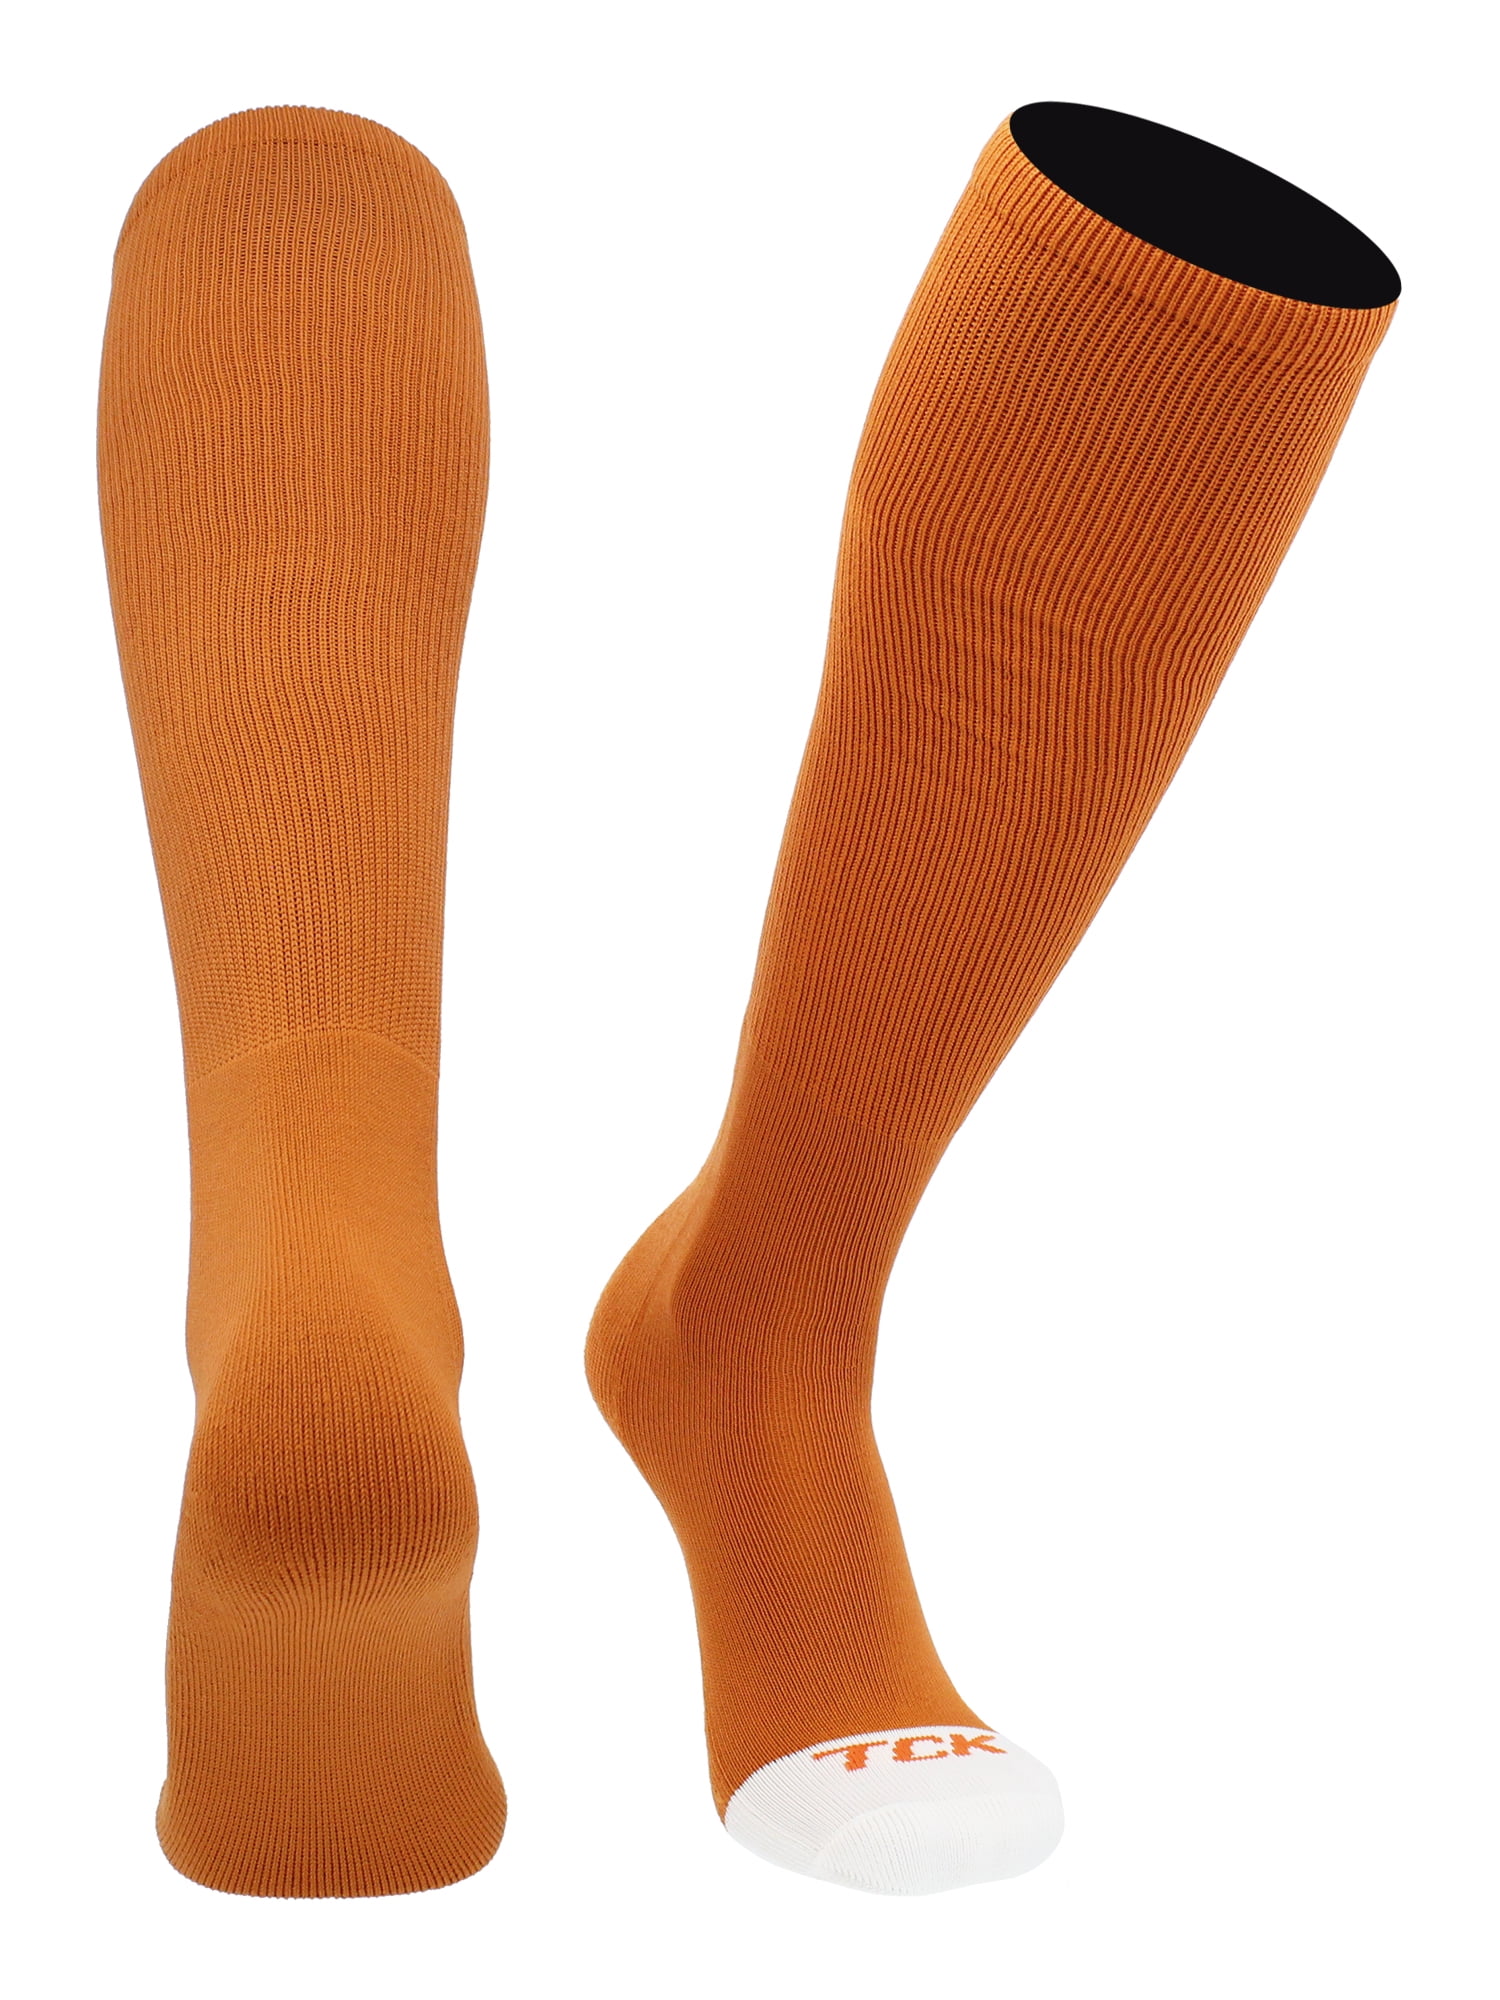 TCK Prosport Performance Tube Socks (Texas Orange, Large) - Walmart.com